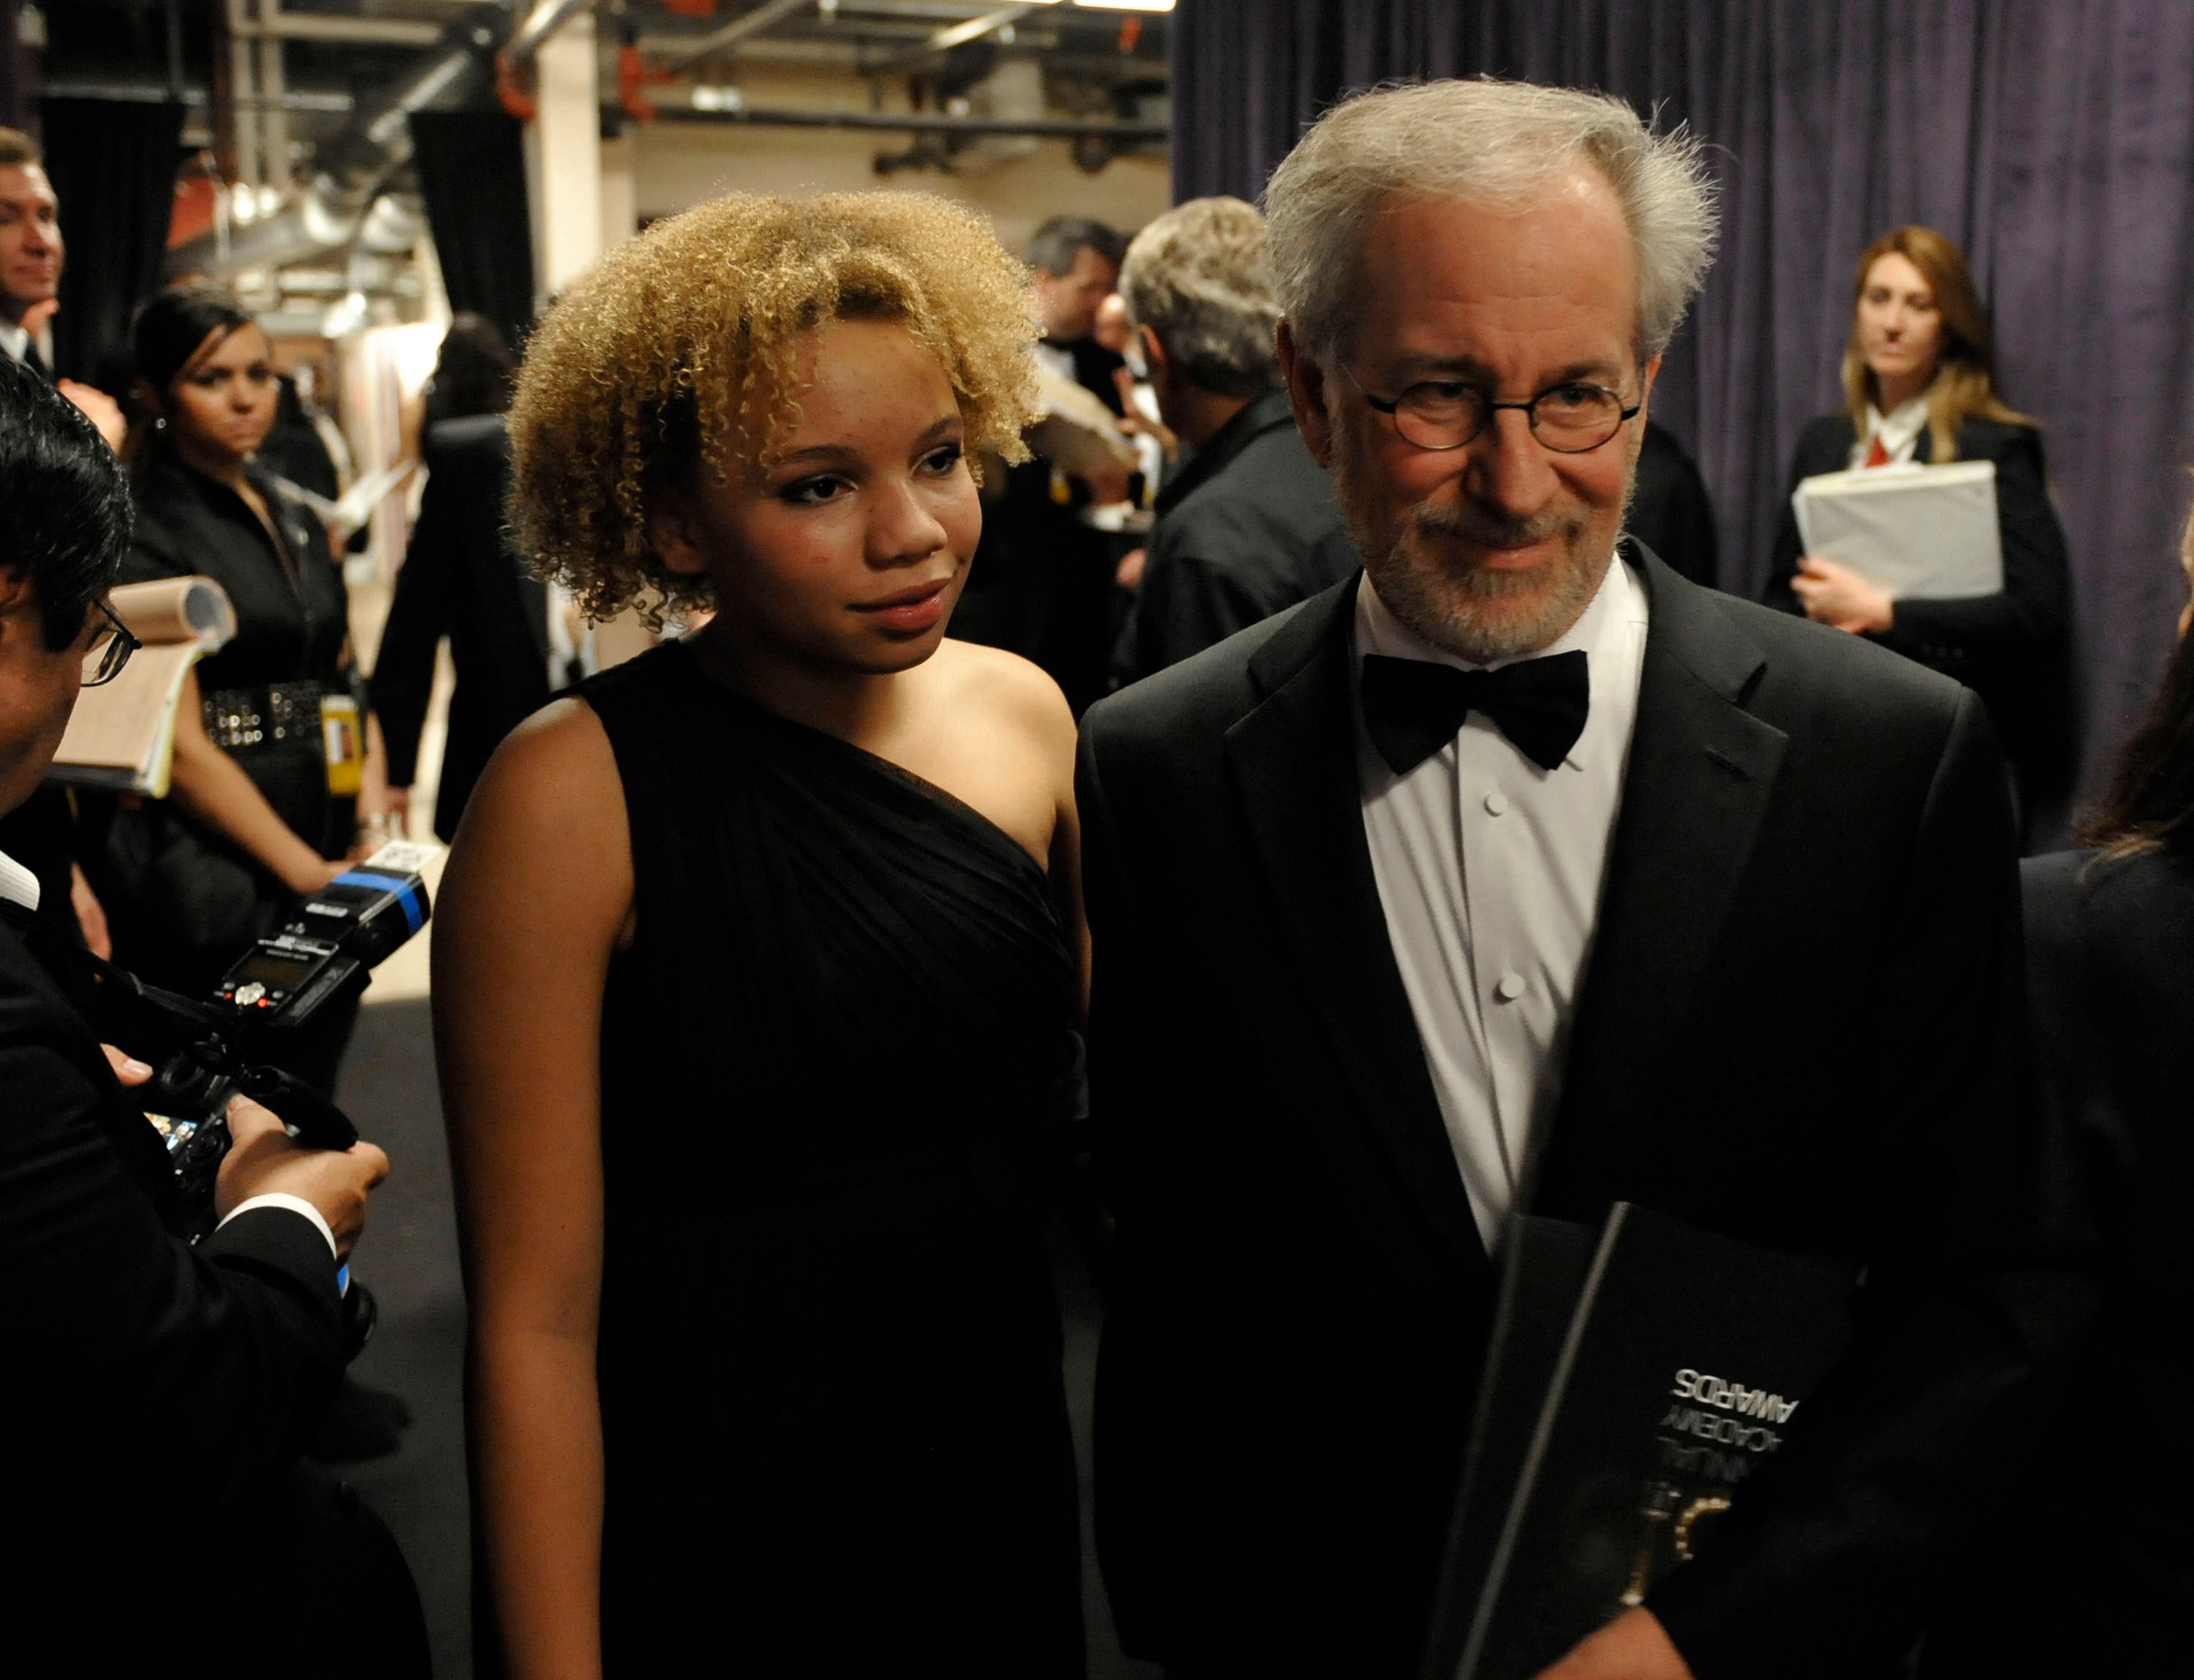 Who Is Mikaela Spielberg? Meet Steven Spielberg's Daughter